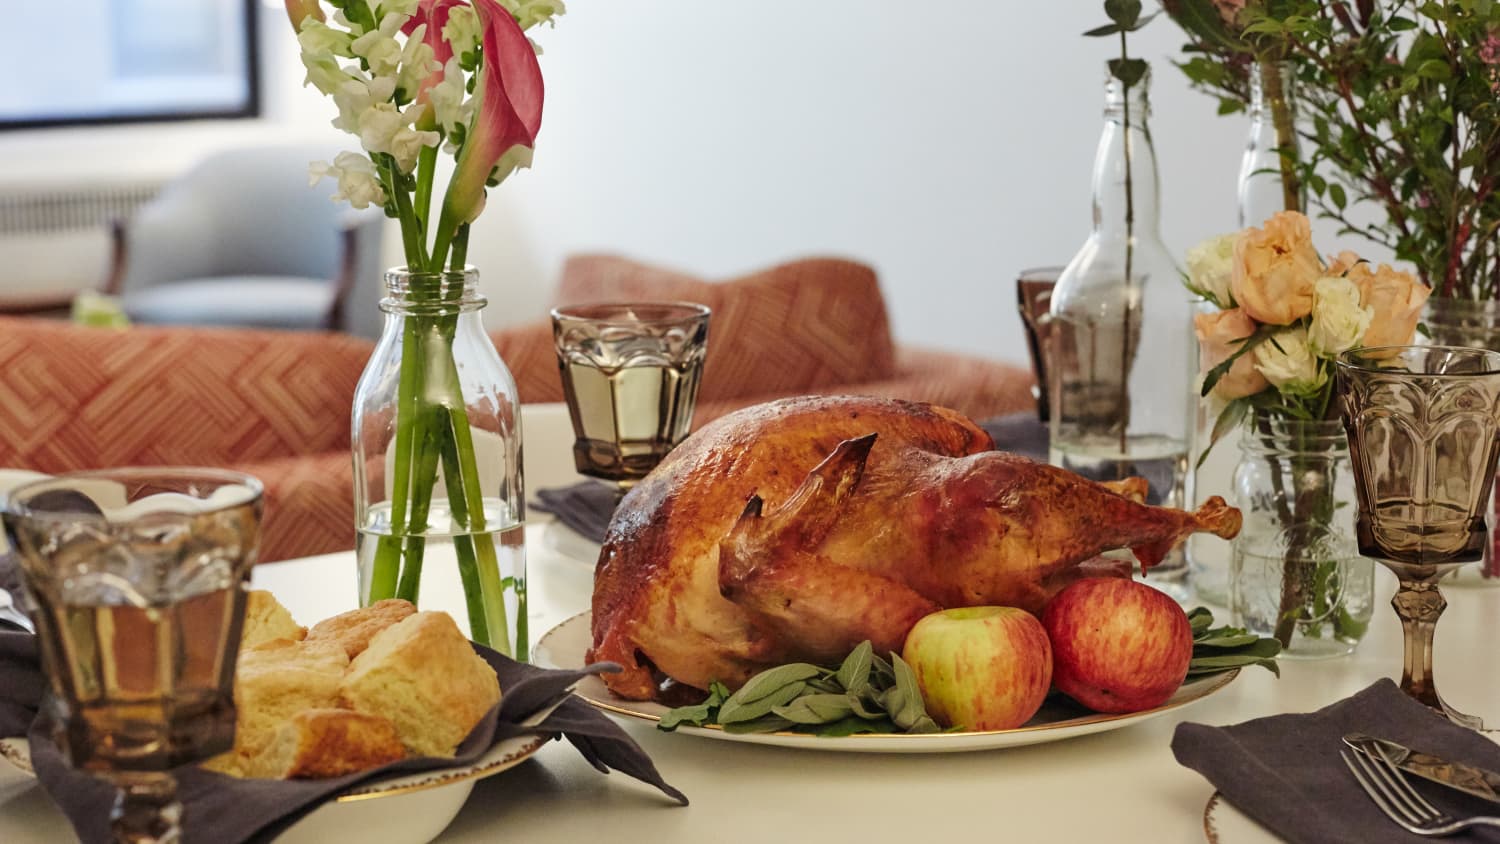 Reynolds Kitchens Disposable Turkey Roasting Pan